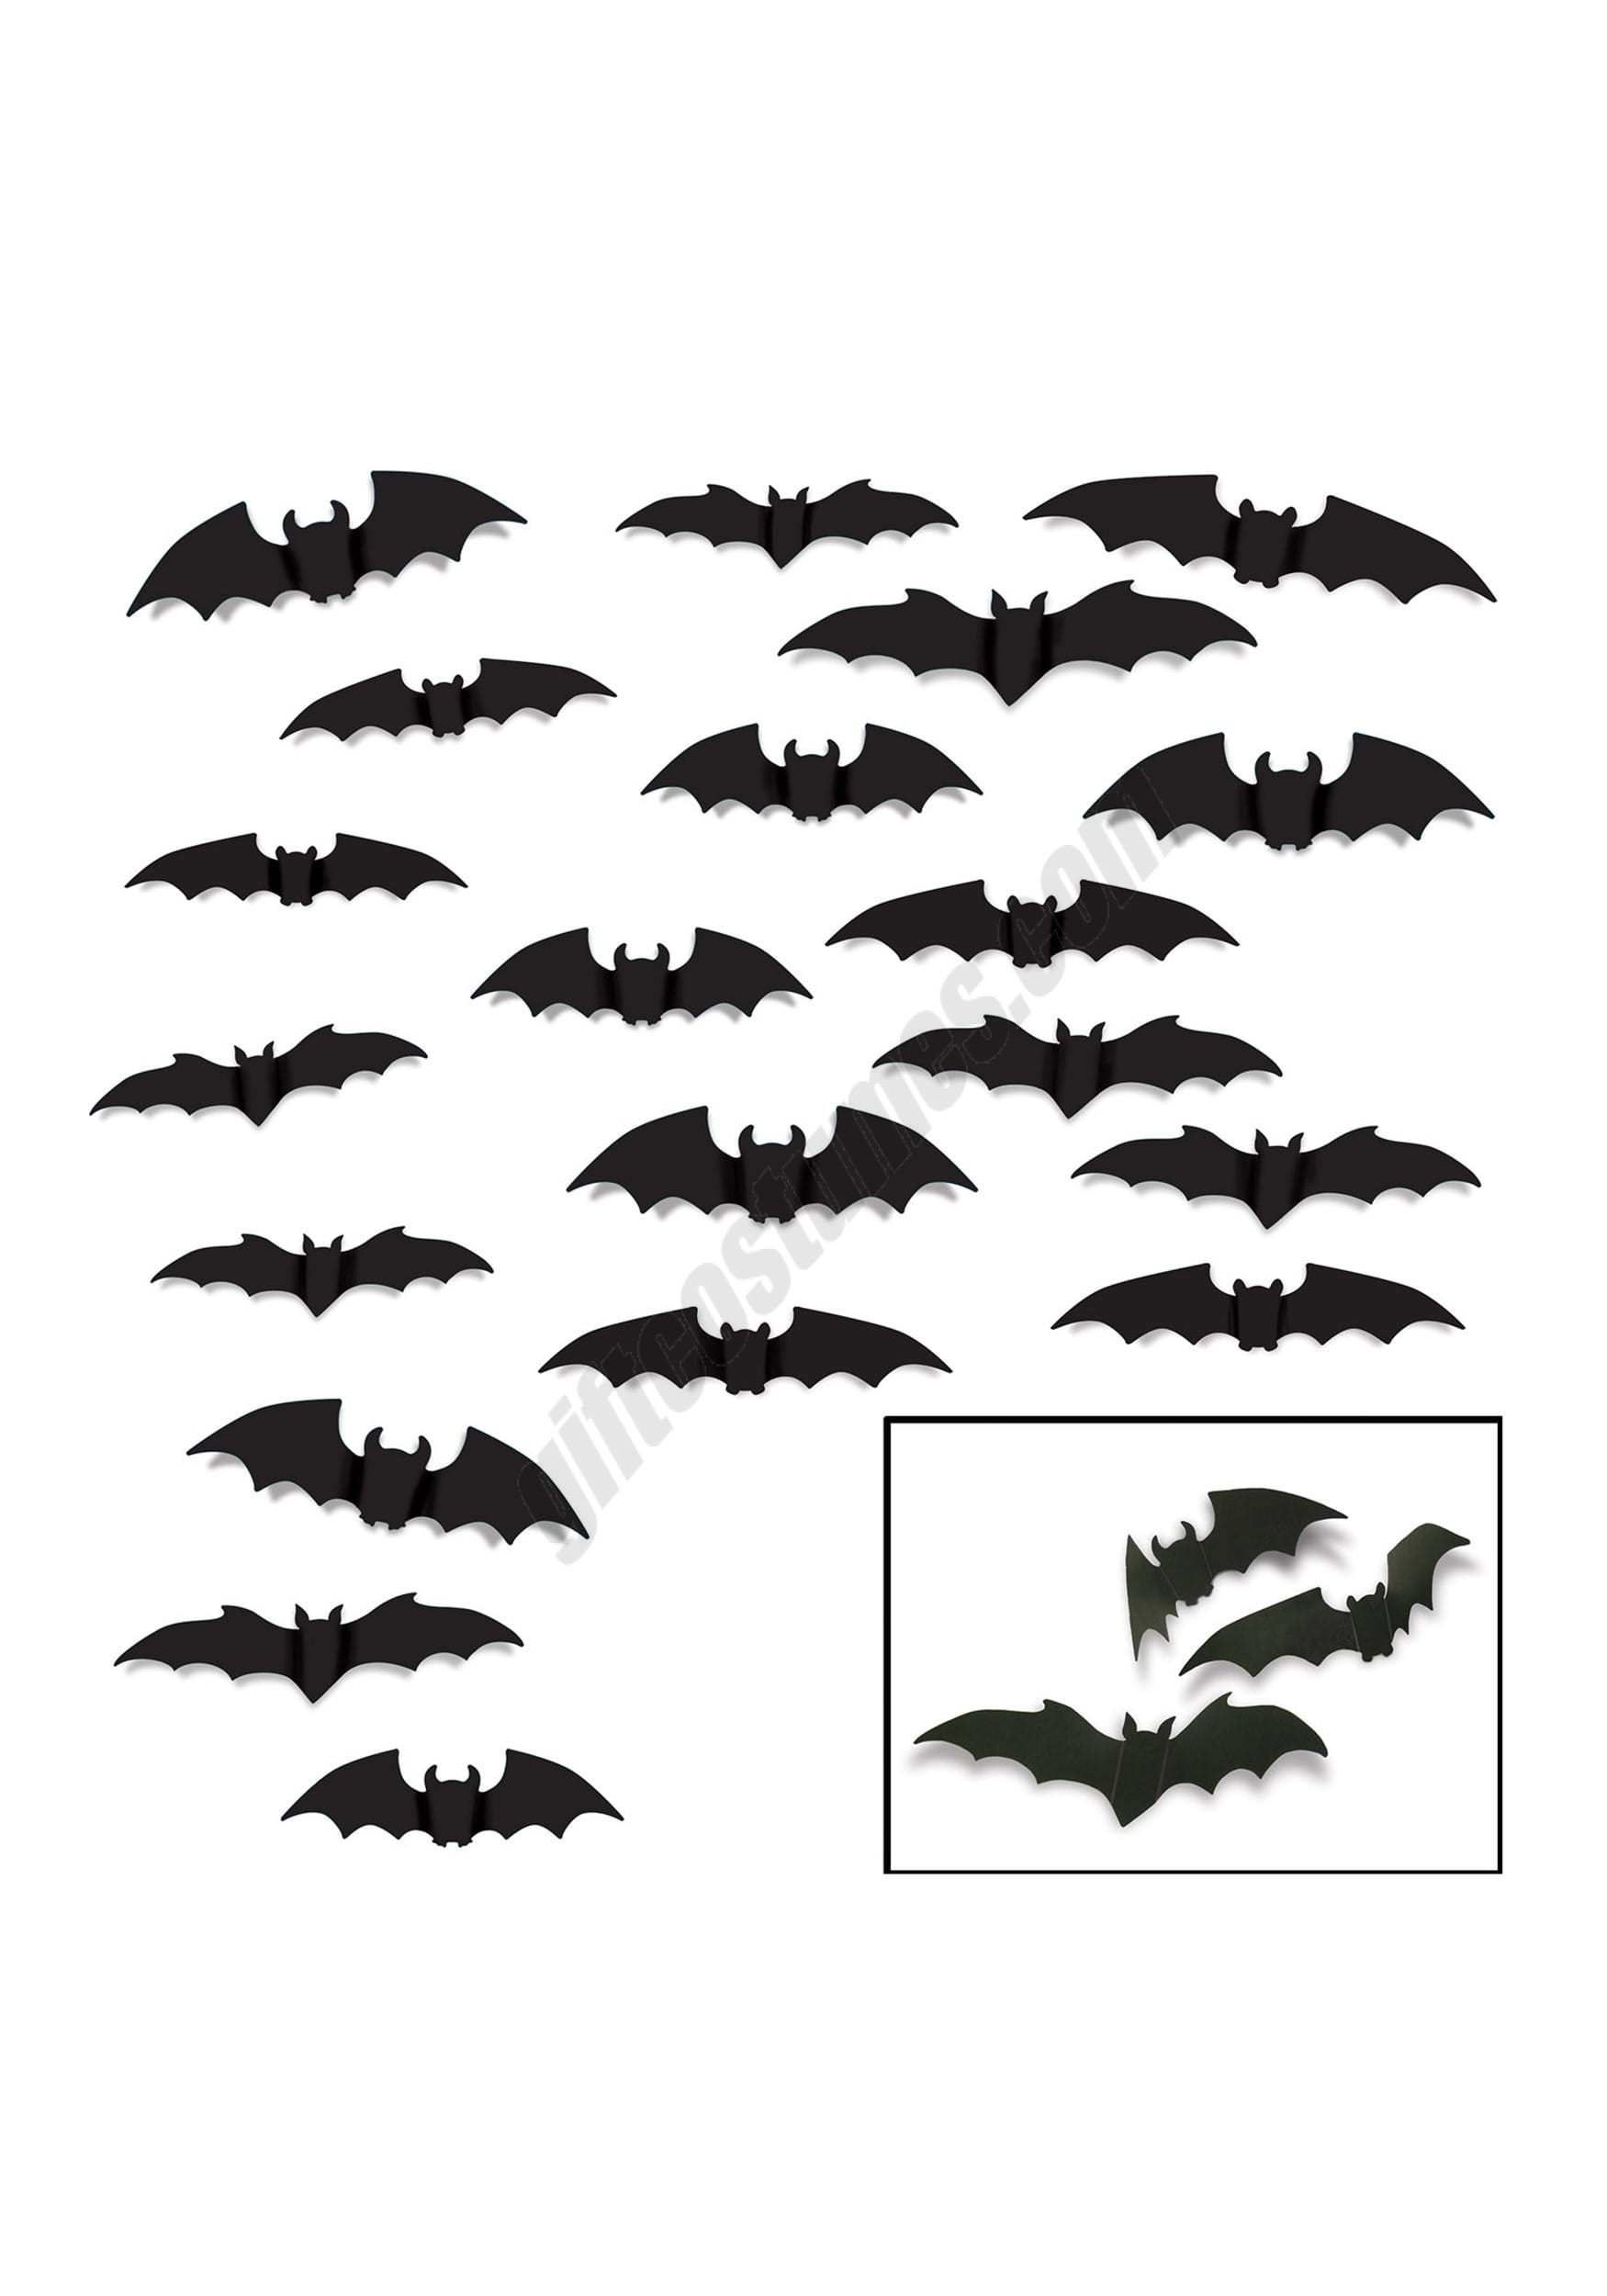 Bat Silhouettes Promotions - Bat Silhouettes Promotions